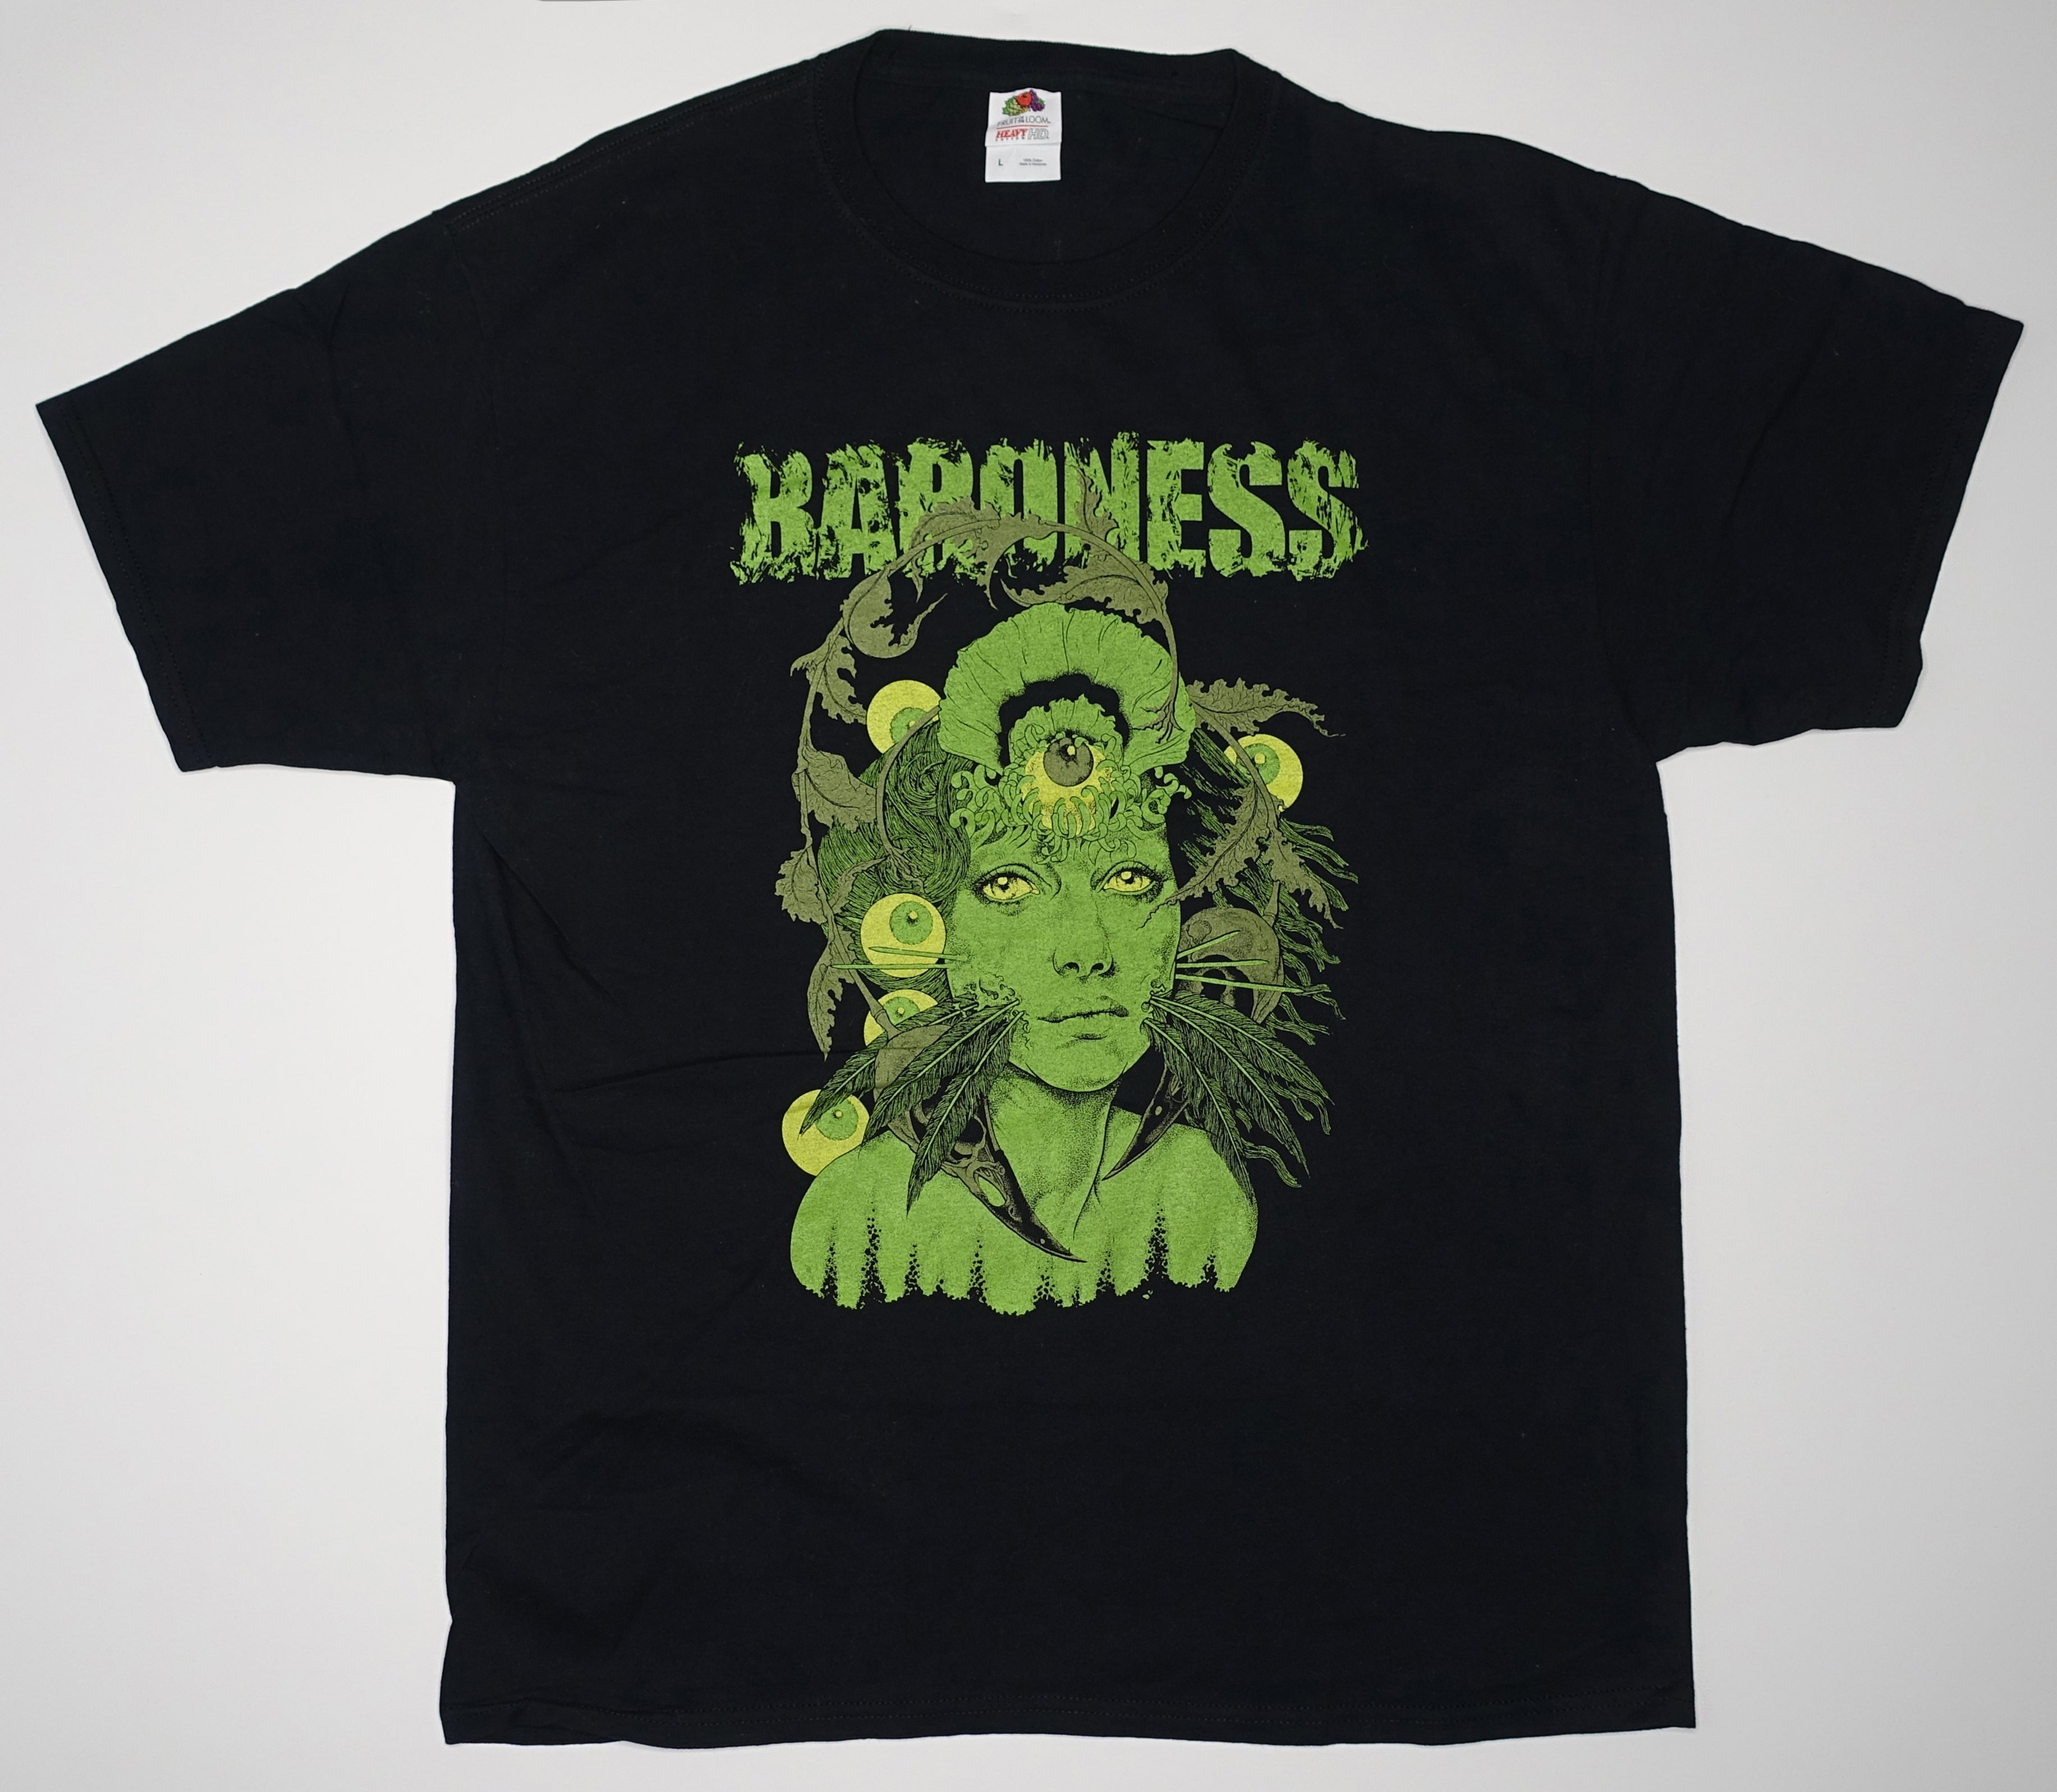 Baroness – Yellow & Green Album 2012 Tour Shirt Size Large